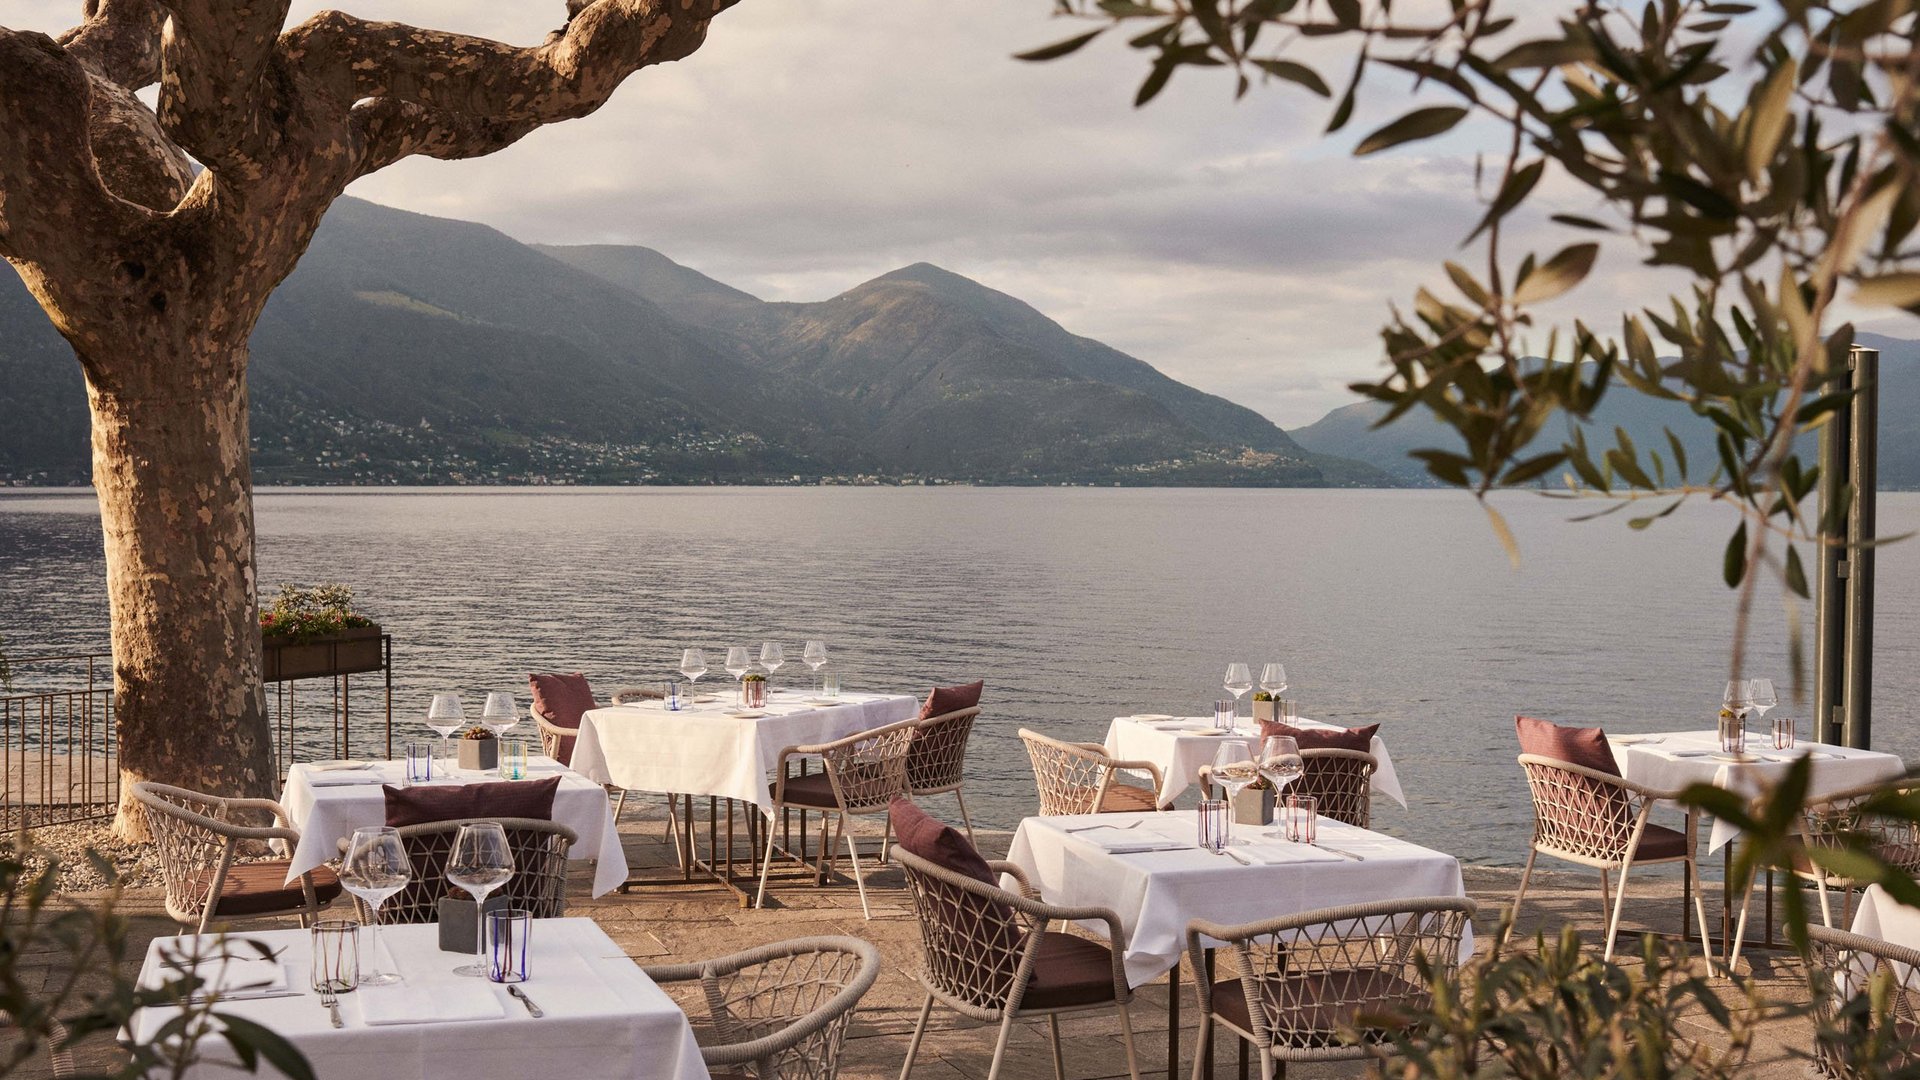 Ihr Gourmetrestaurant in Ascona. Direkt am Lago Maggiore.